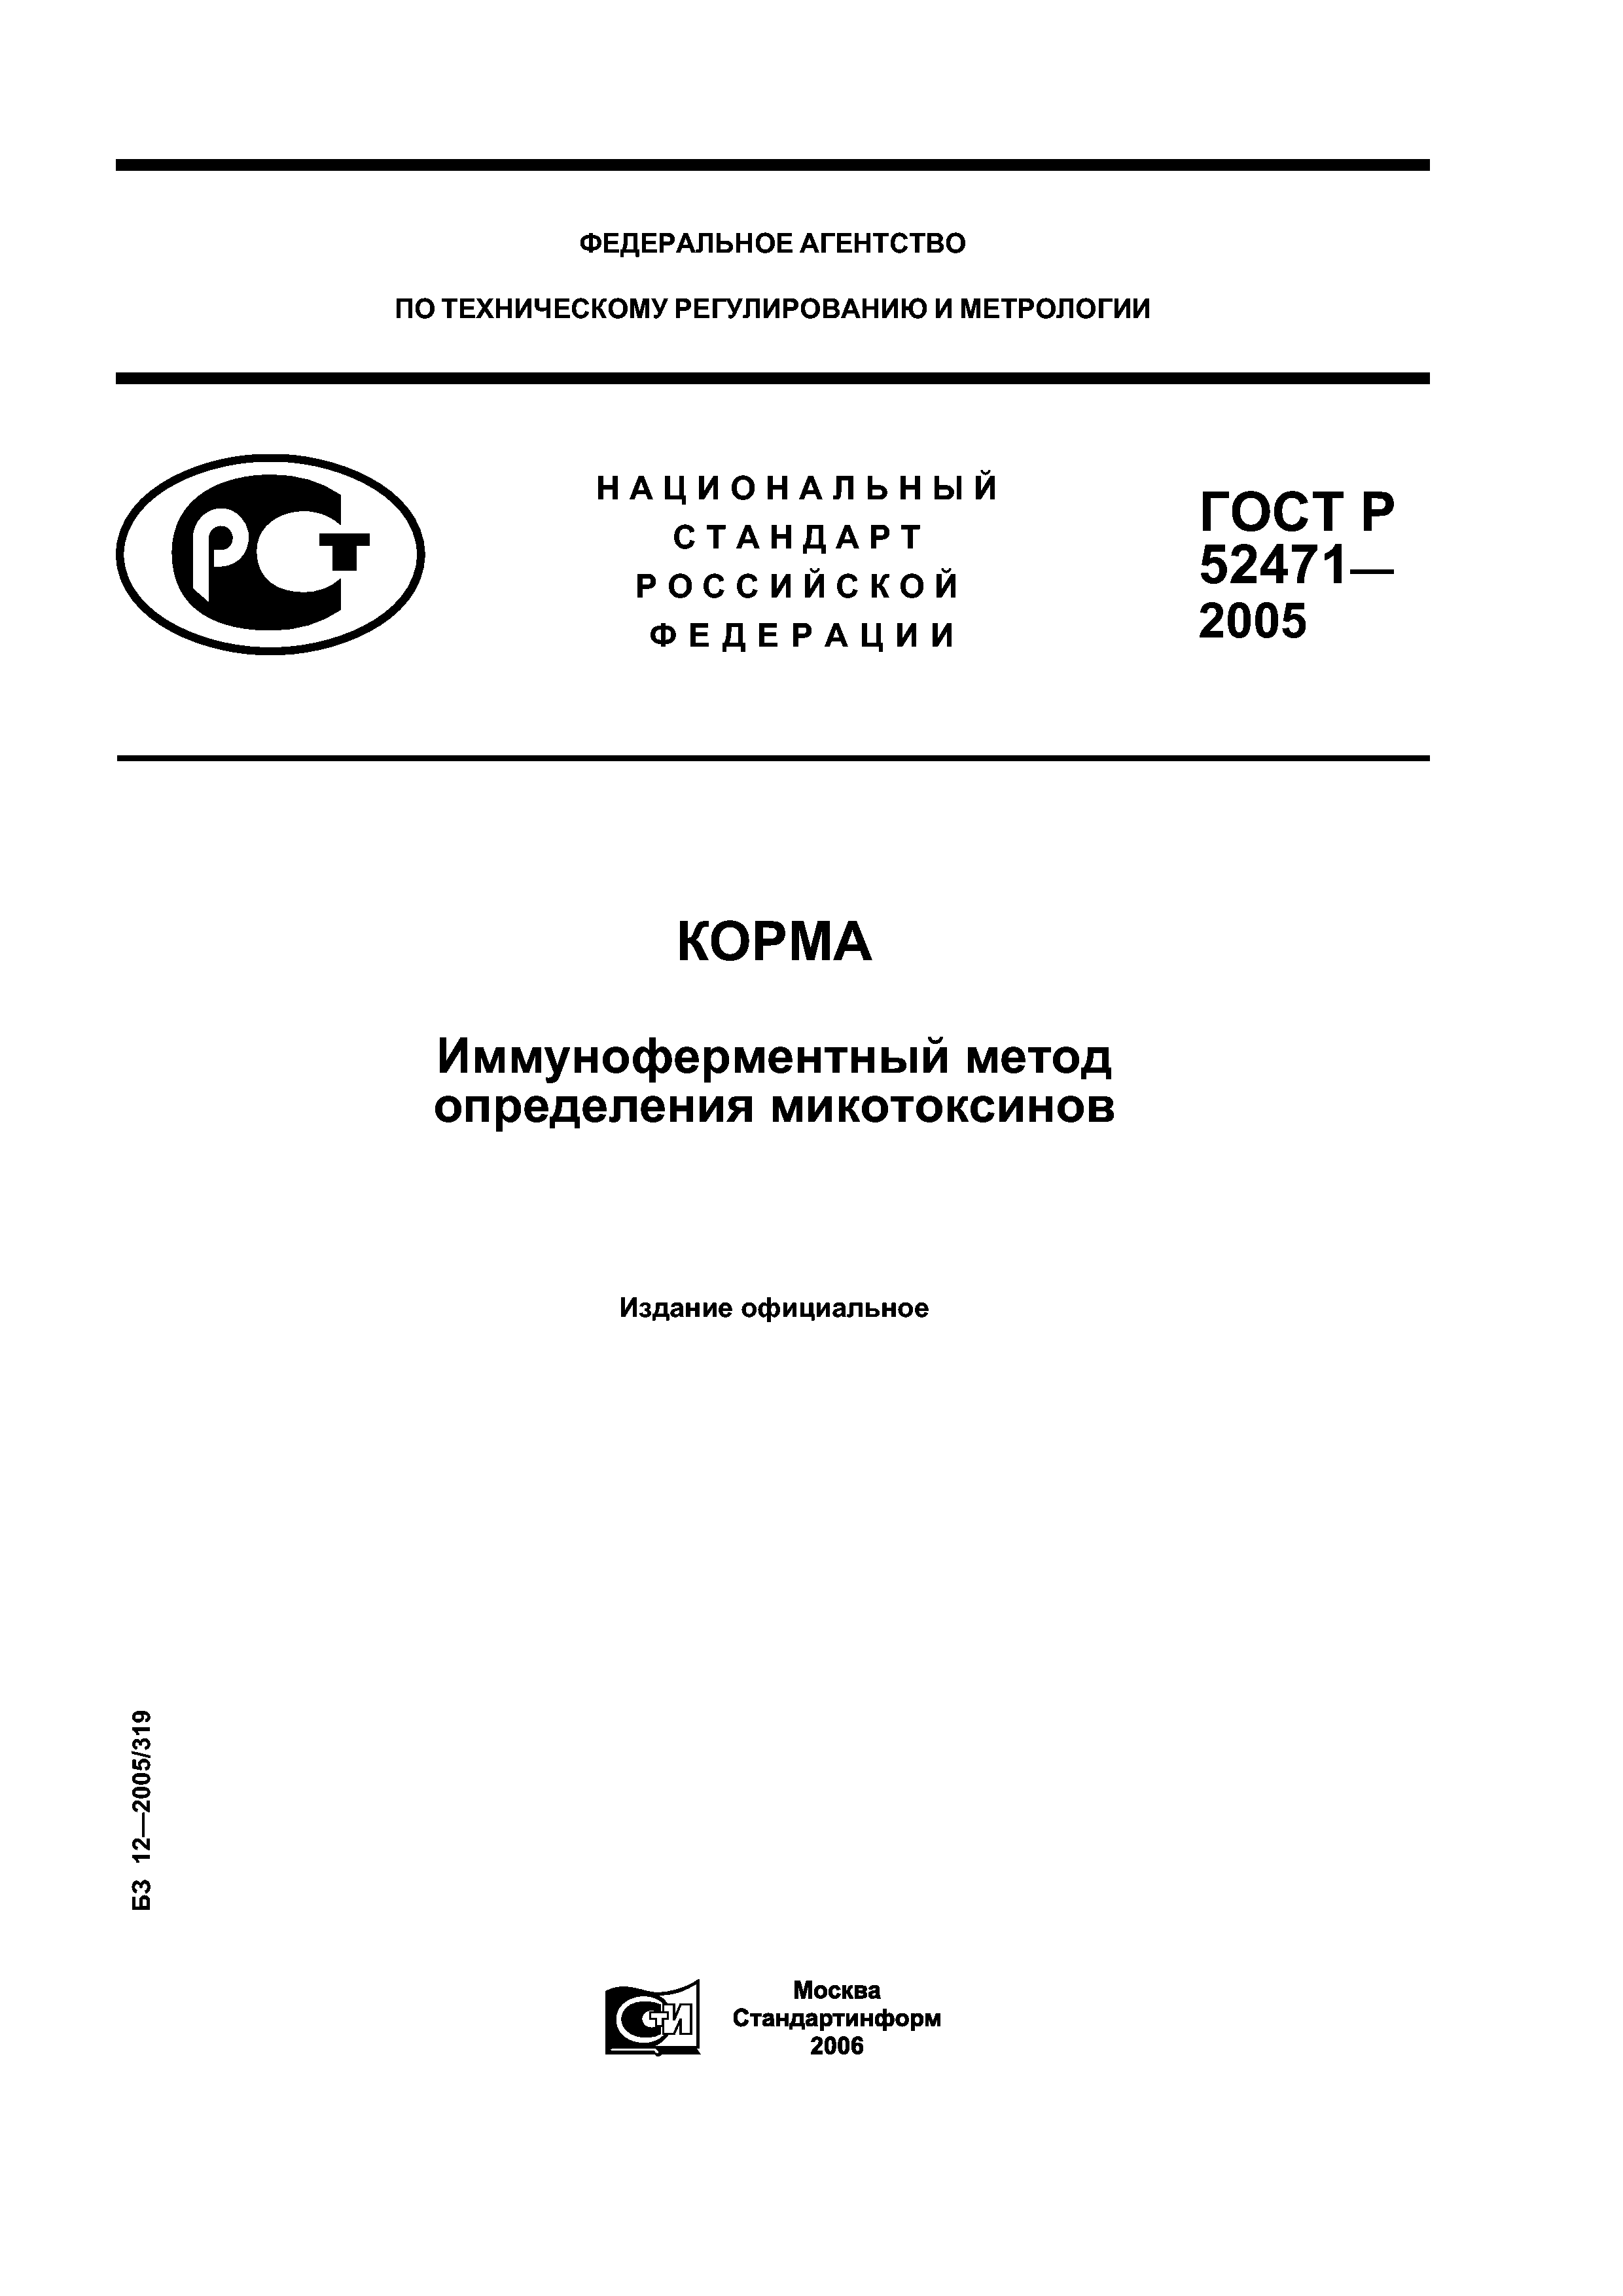 ГОСТ Р 52471-2005